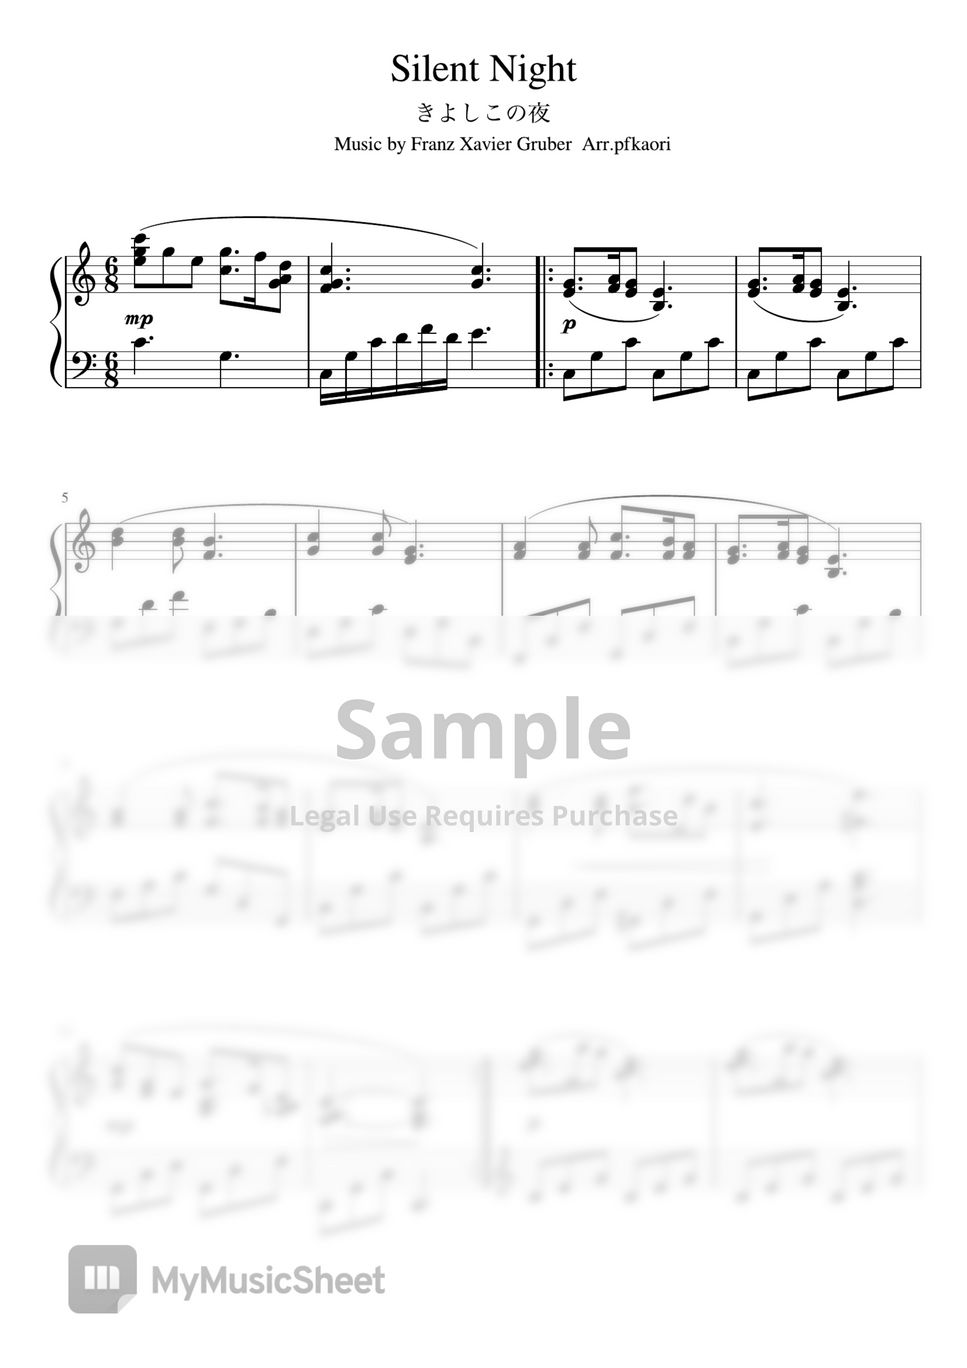 F.X.Gruber - Silent Night (Cdur・Piano solo intermadiate) Sheets by pfkaori